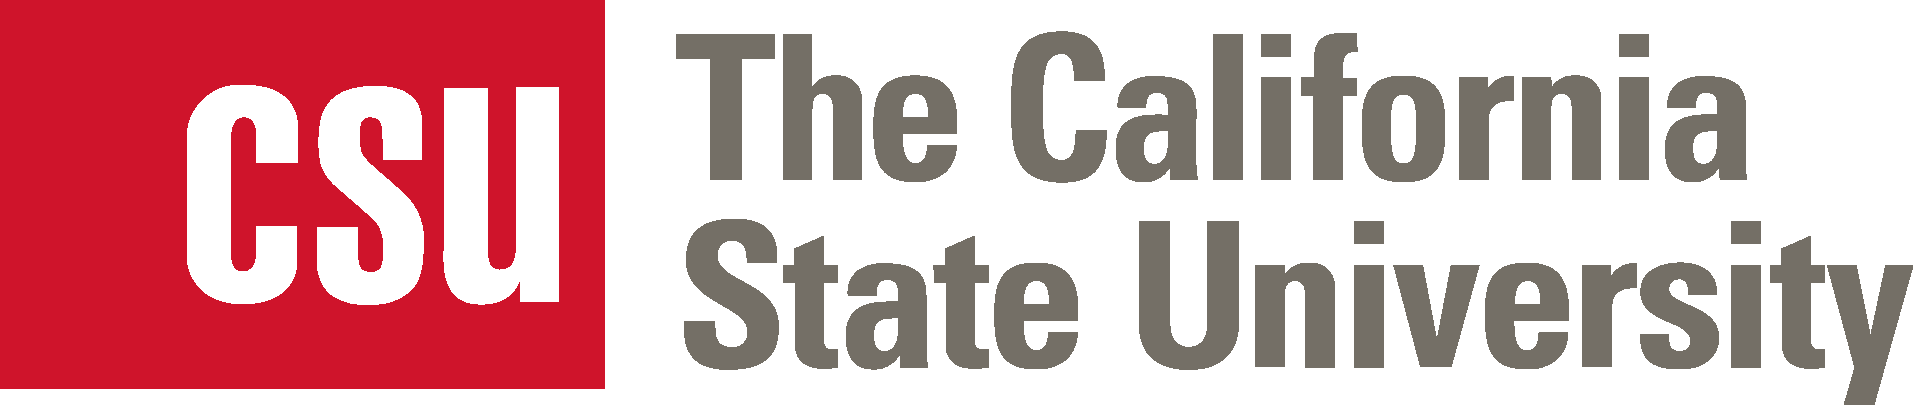 CSU The California State University Logo